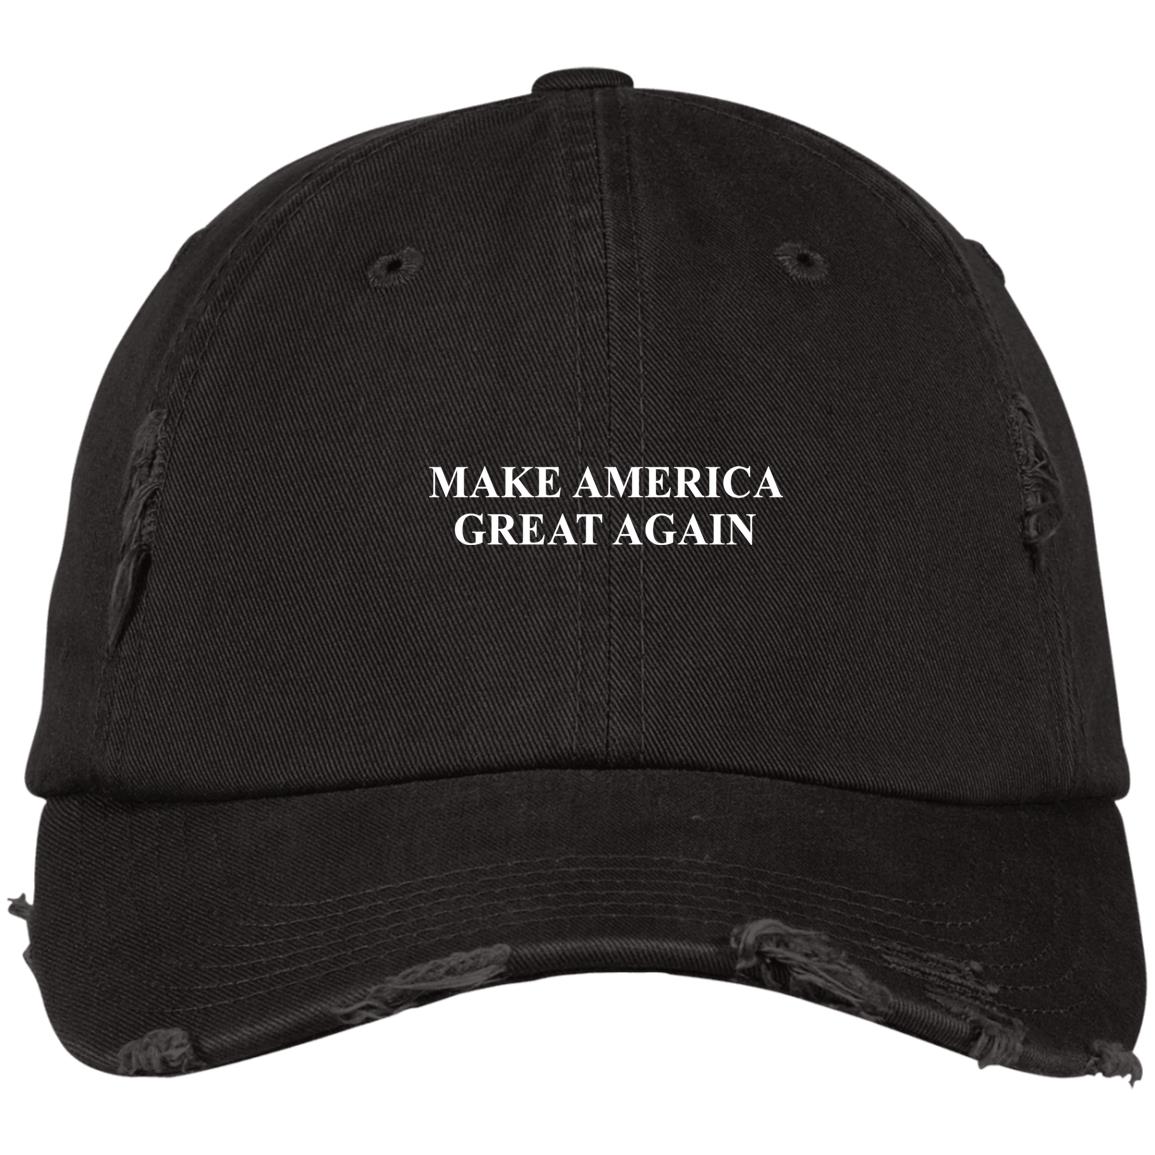 Mexicans make America great again hat, cap - Rockatee